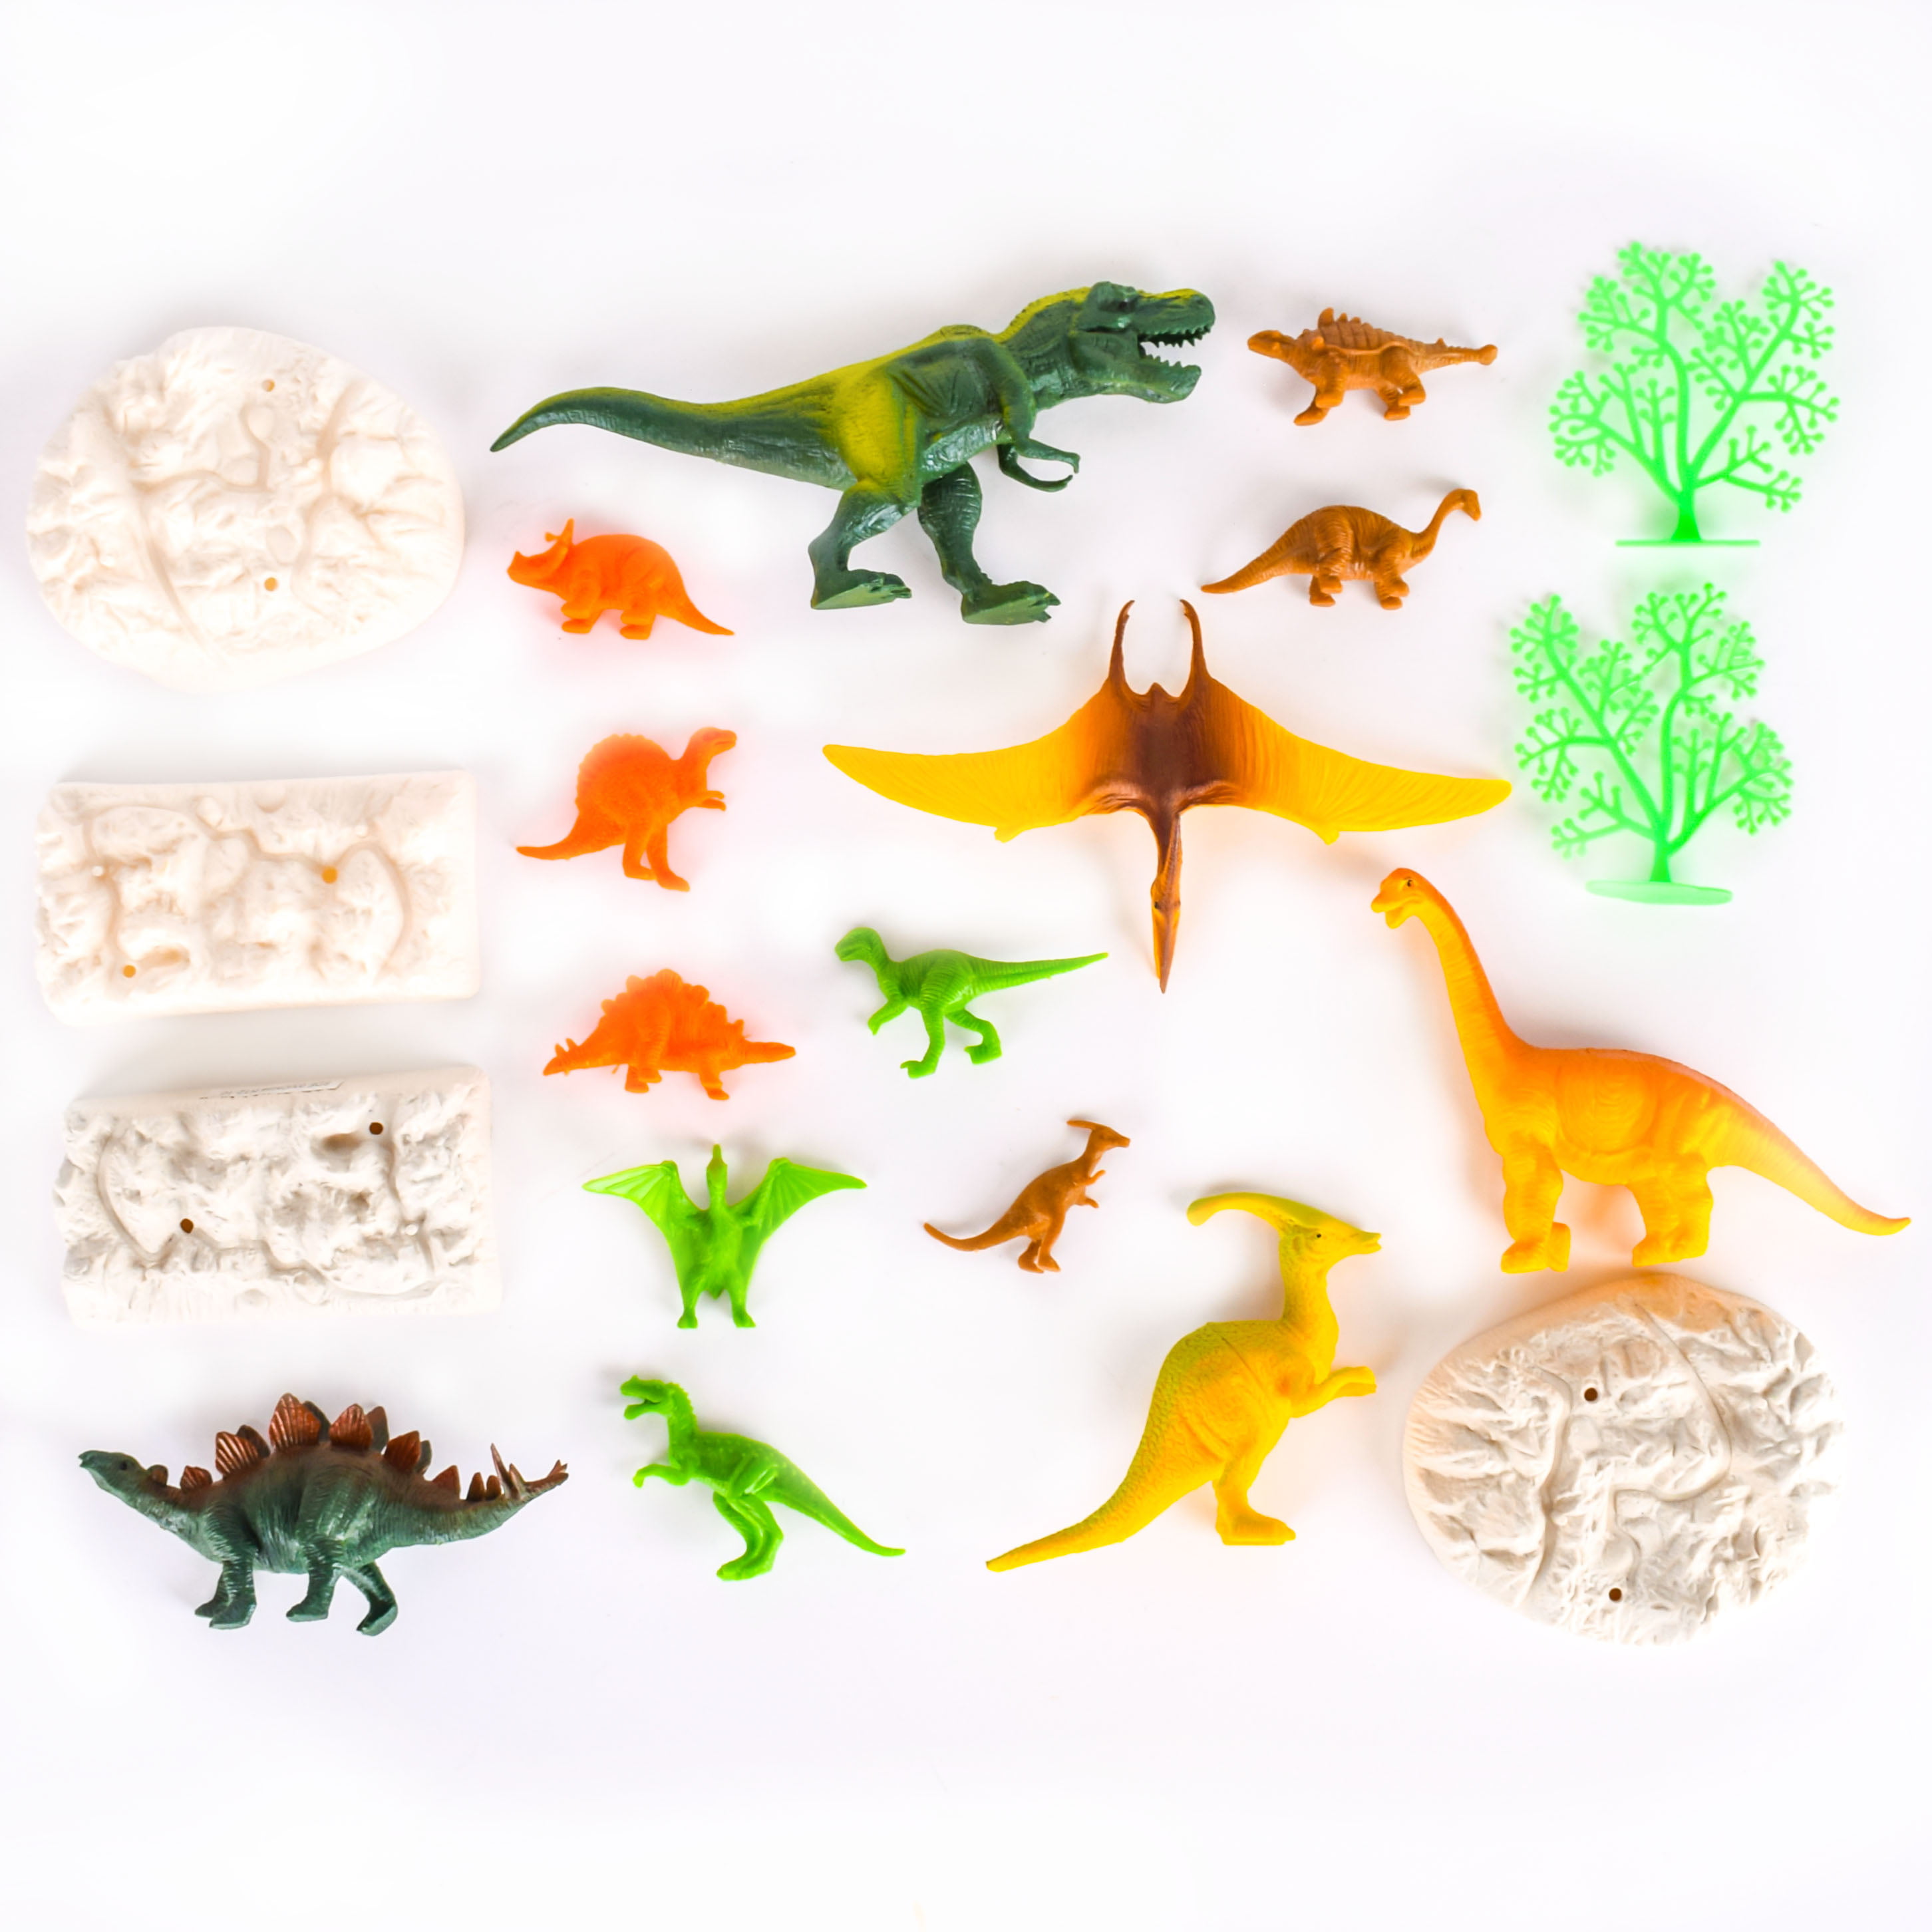 12 DINOSAUR GLIDER dino prehistoric novelty flying toy dinosuars assorted new 